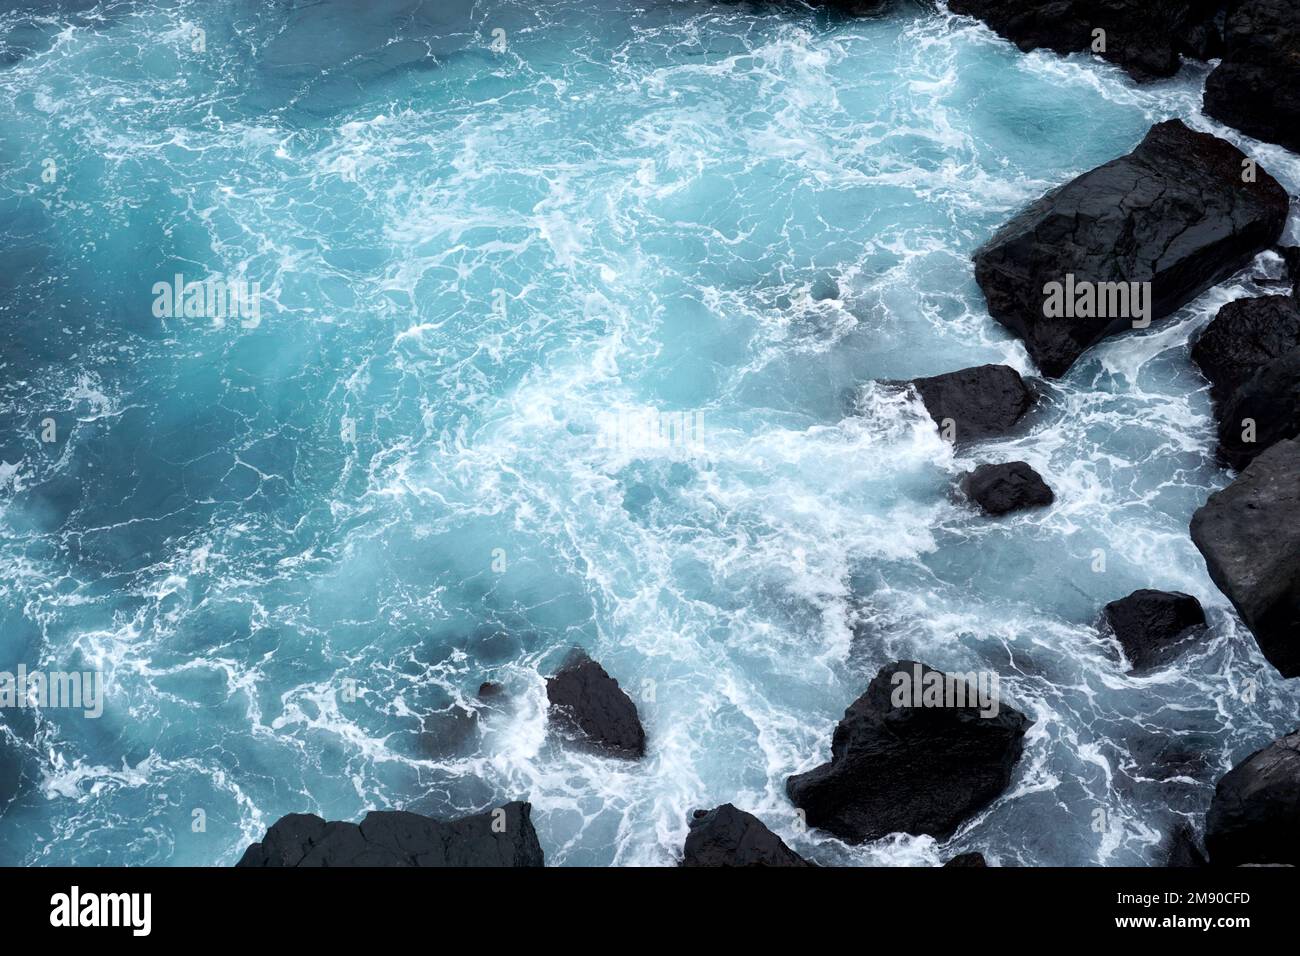 The power of the sea - waves crash against dark rocks Stock Photo